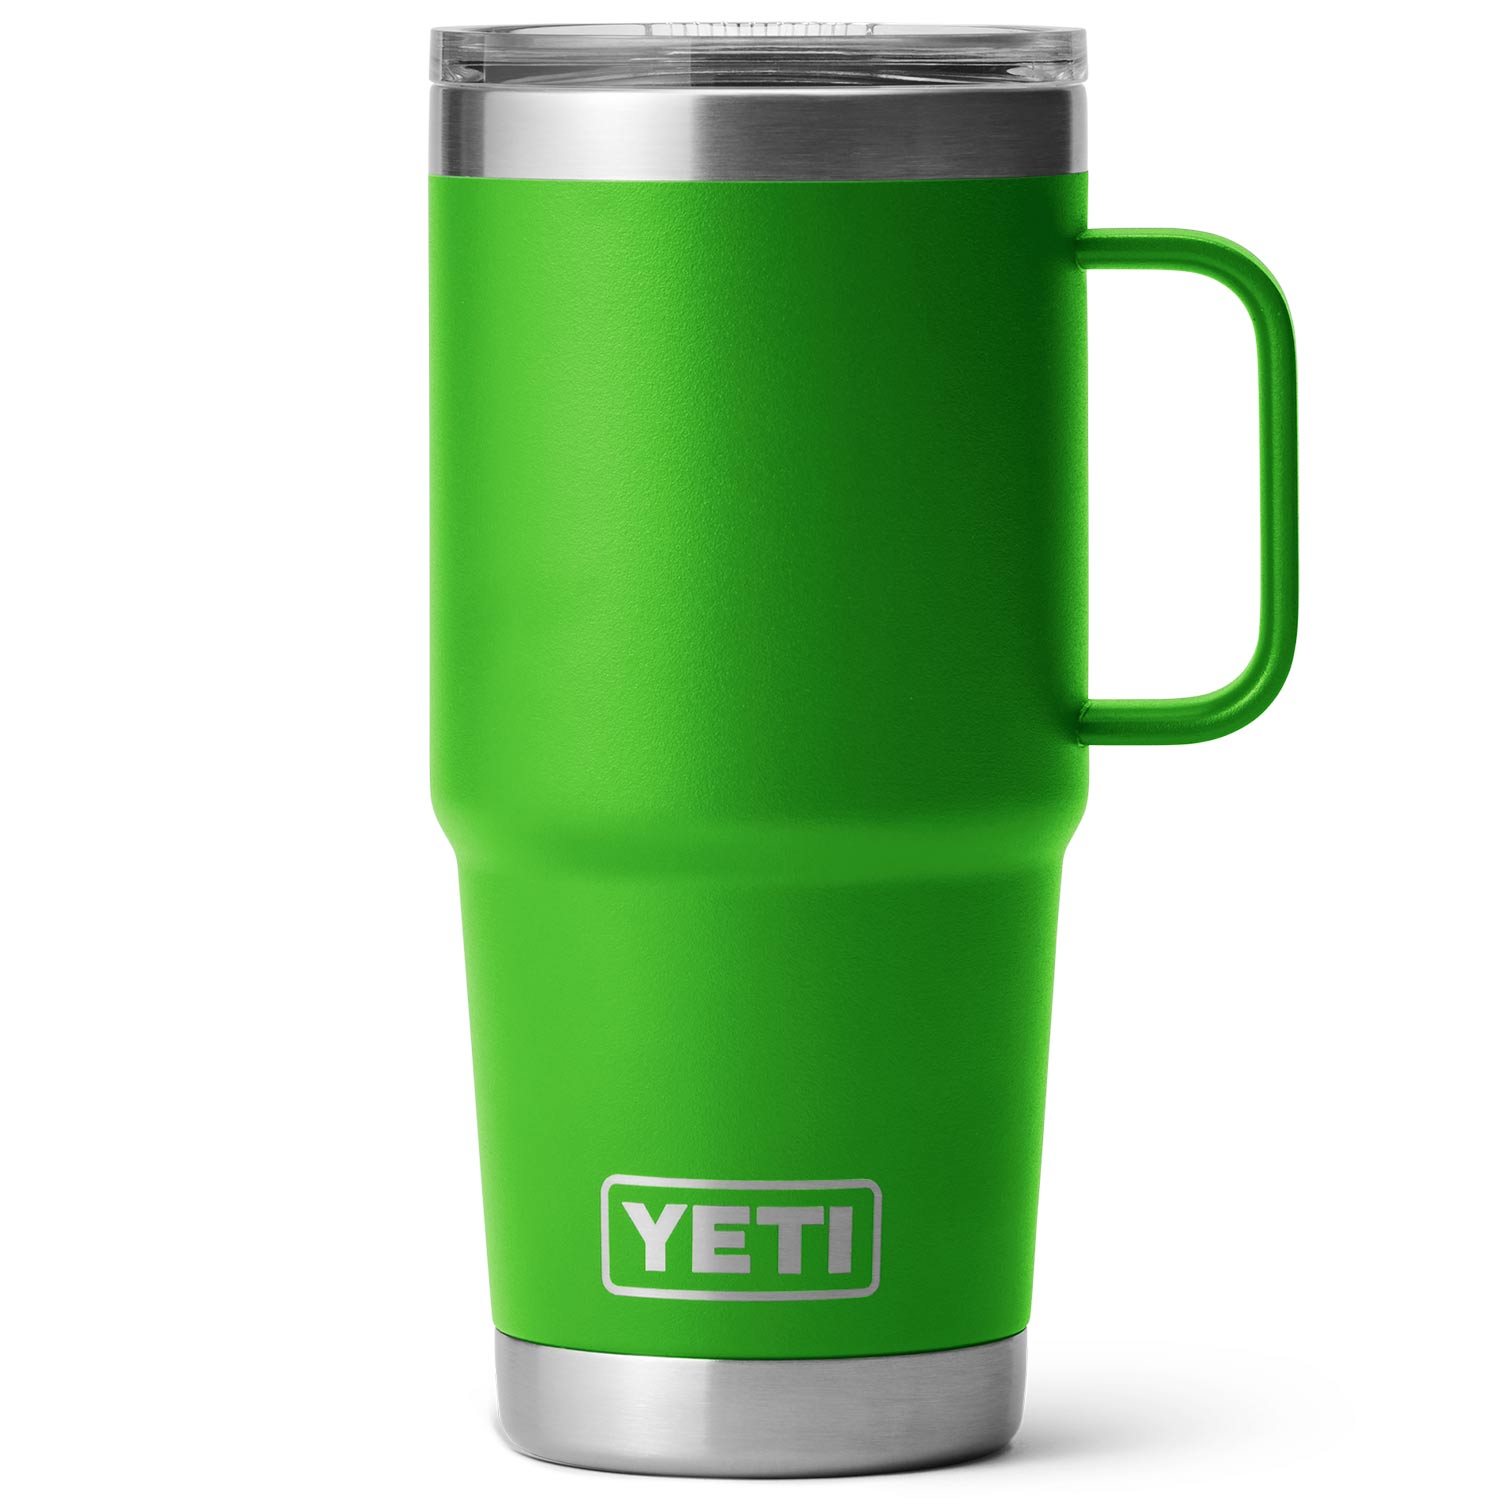 Yeti – The Verde Van